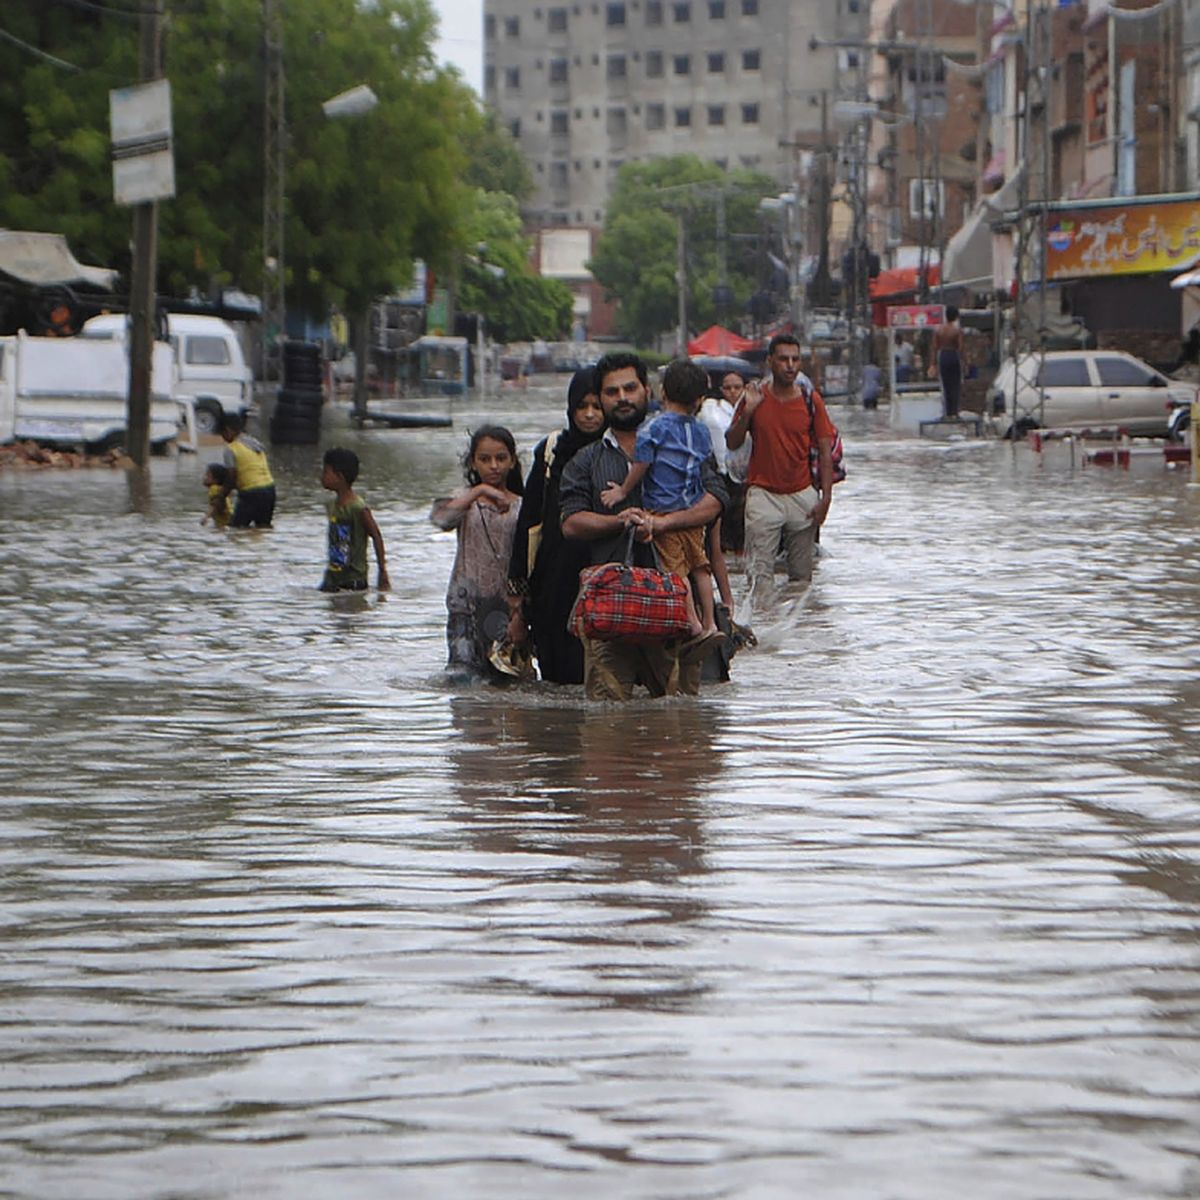 Pakistan news: At least 90 dead after heavy monsoon rains across the country including Karachi, Kashmir